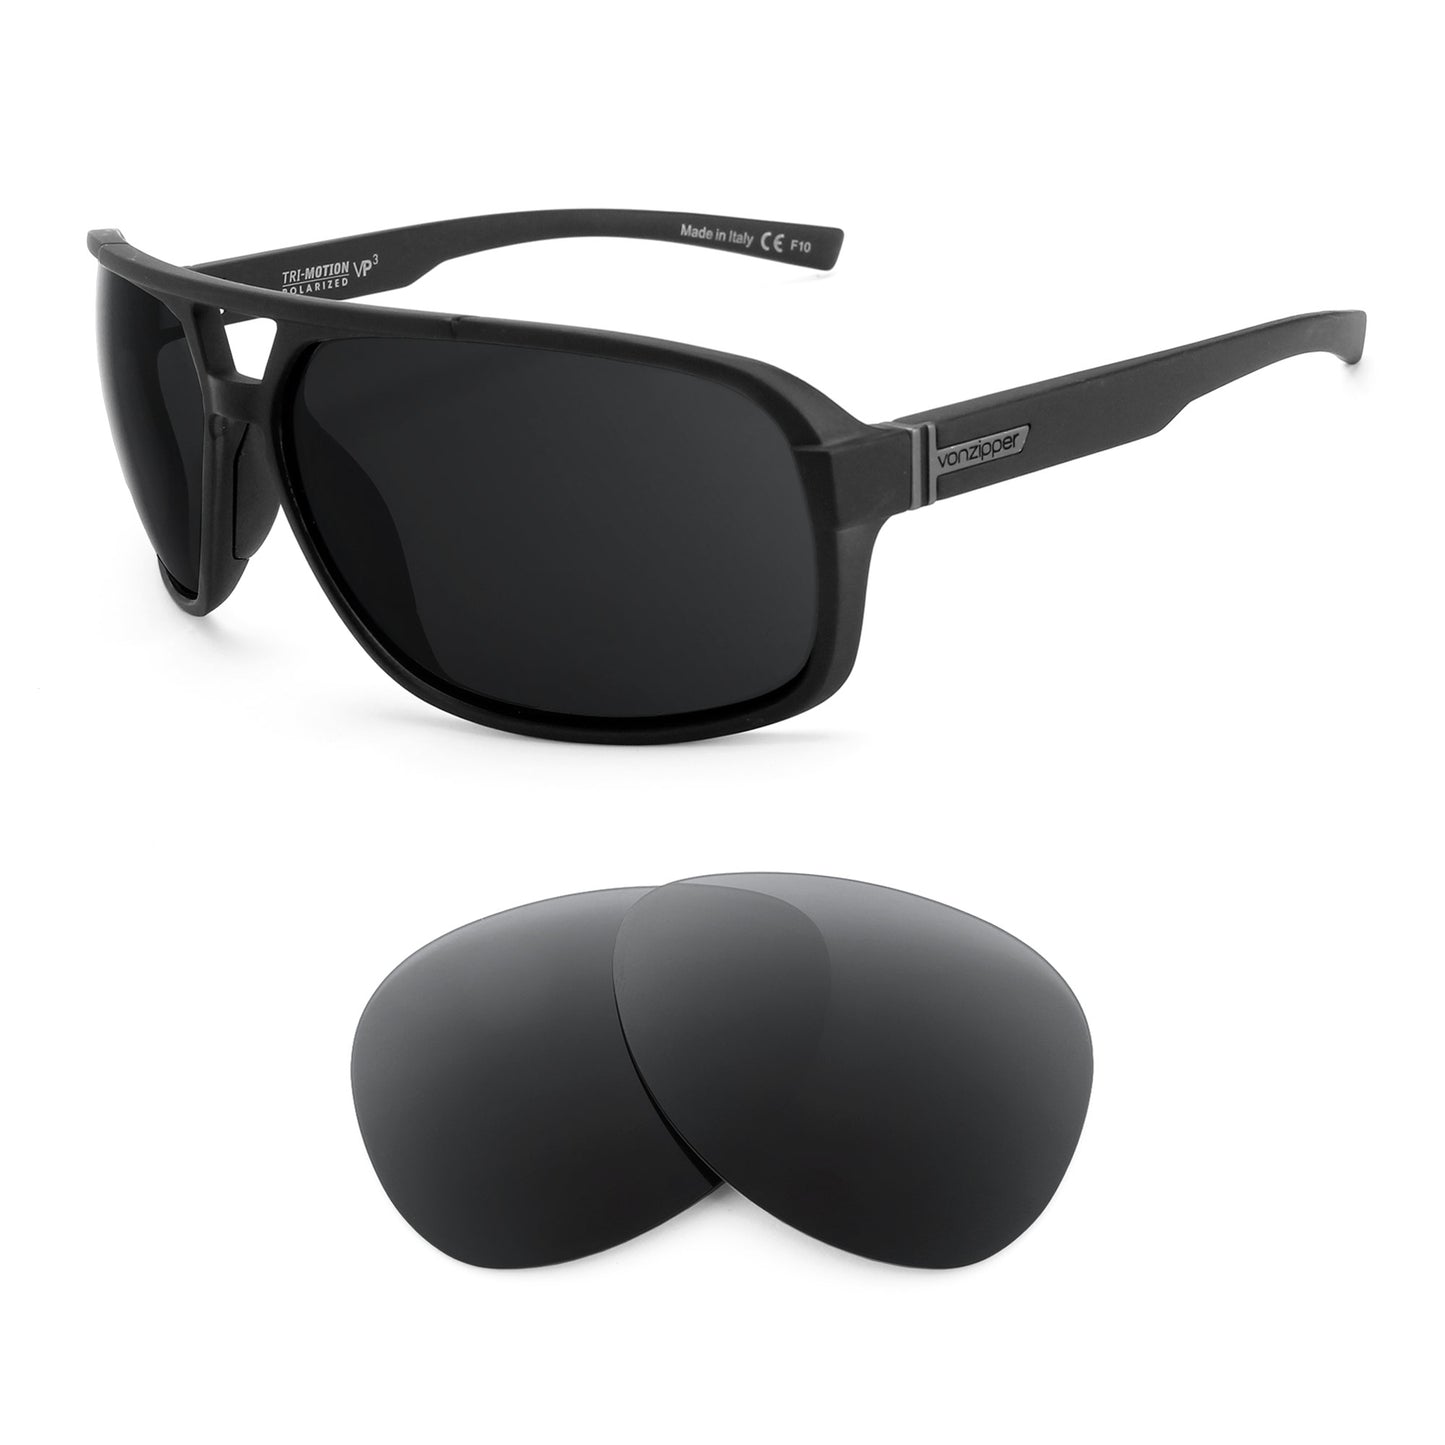 VonZipper Decco sunglasses with replacement lenses